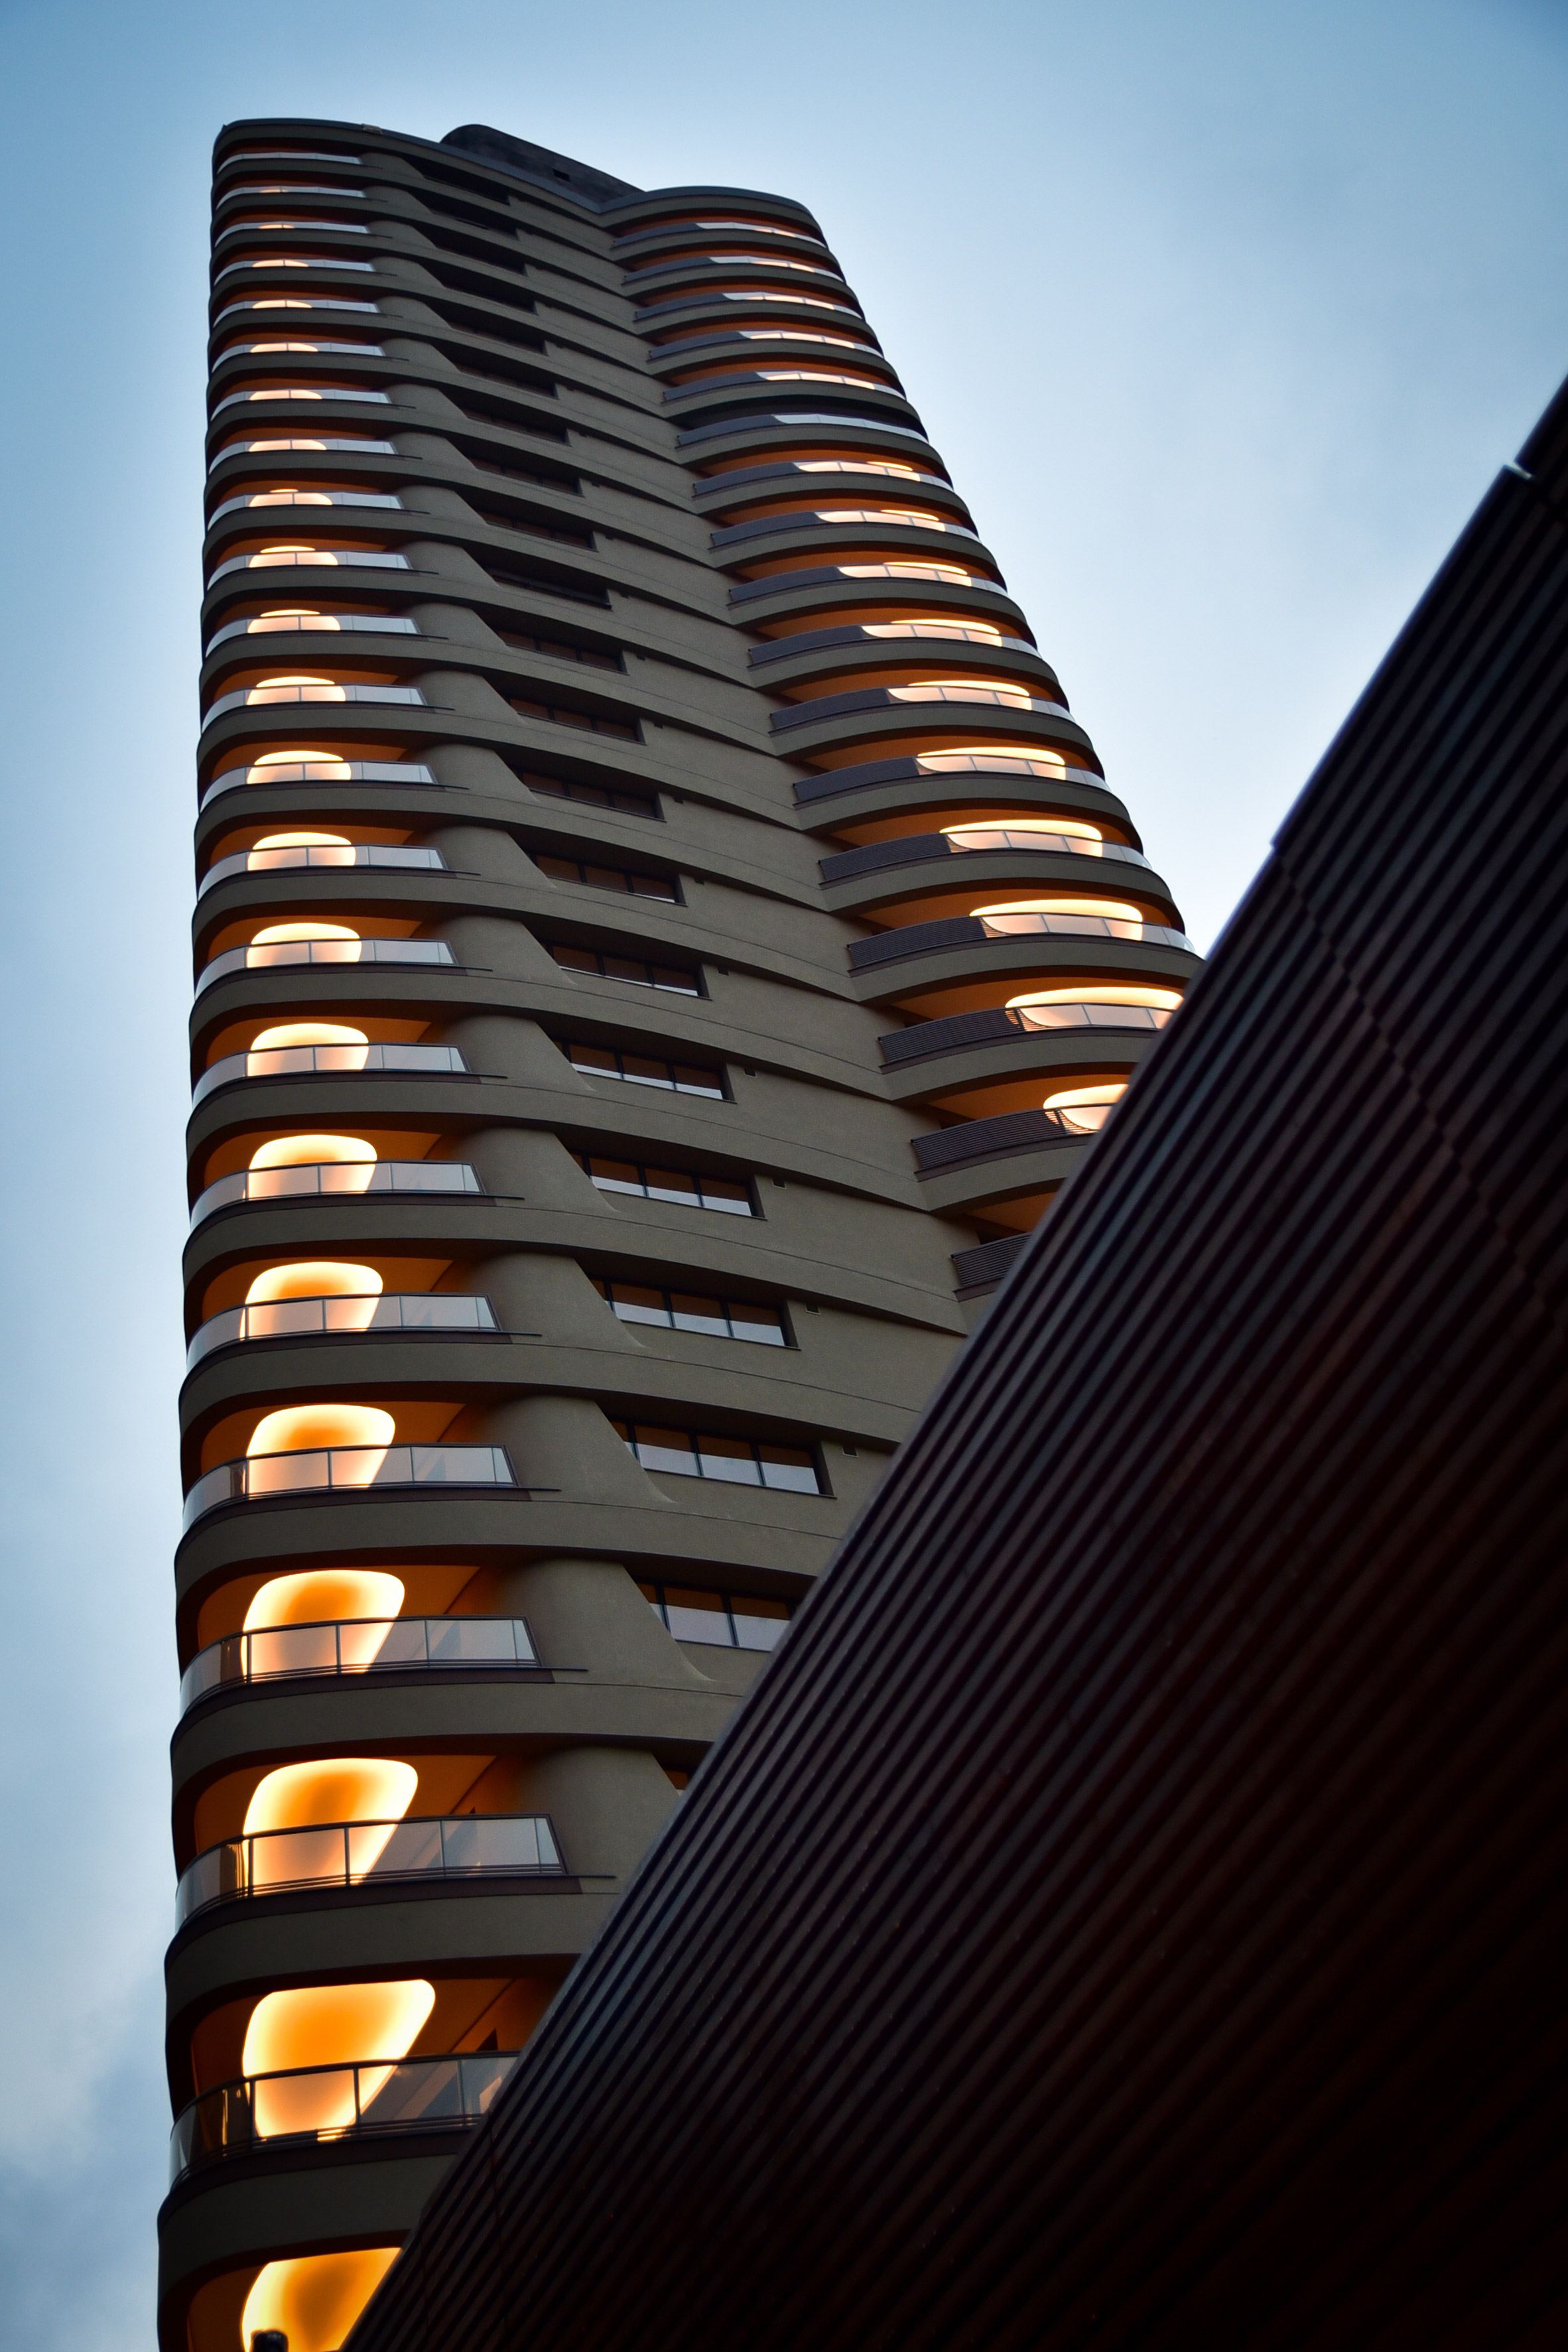 Pinfarina completes luxury tower in São Paulo